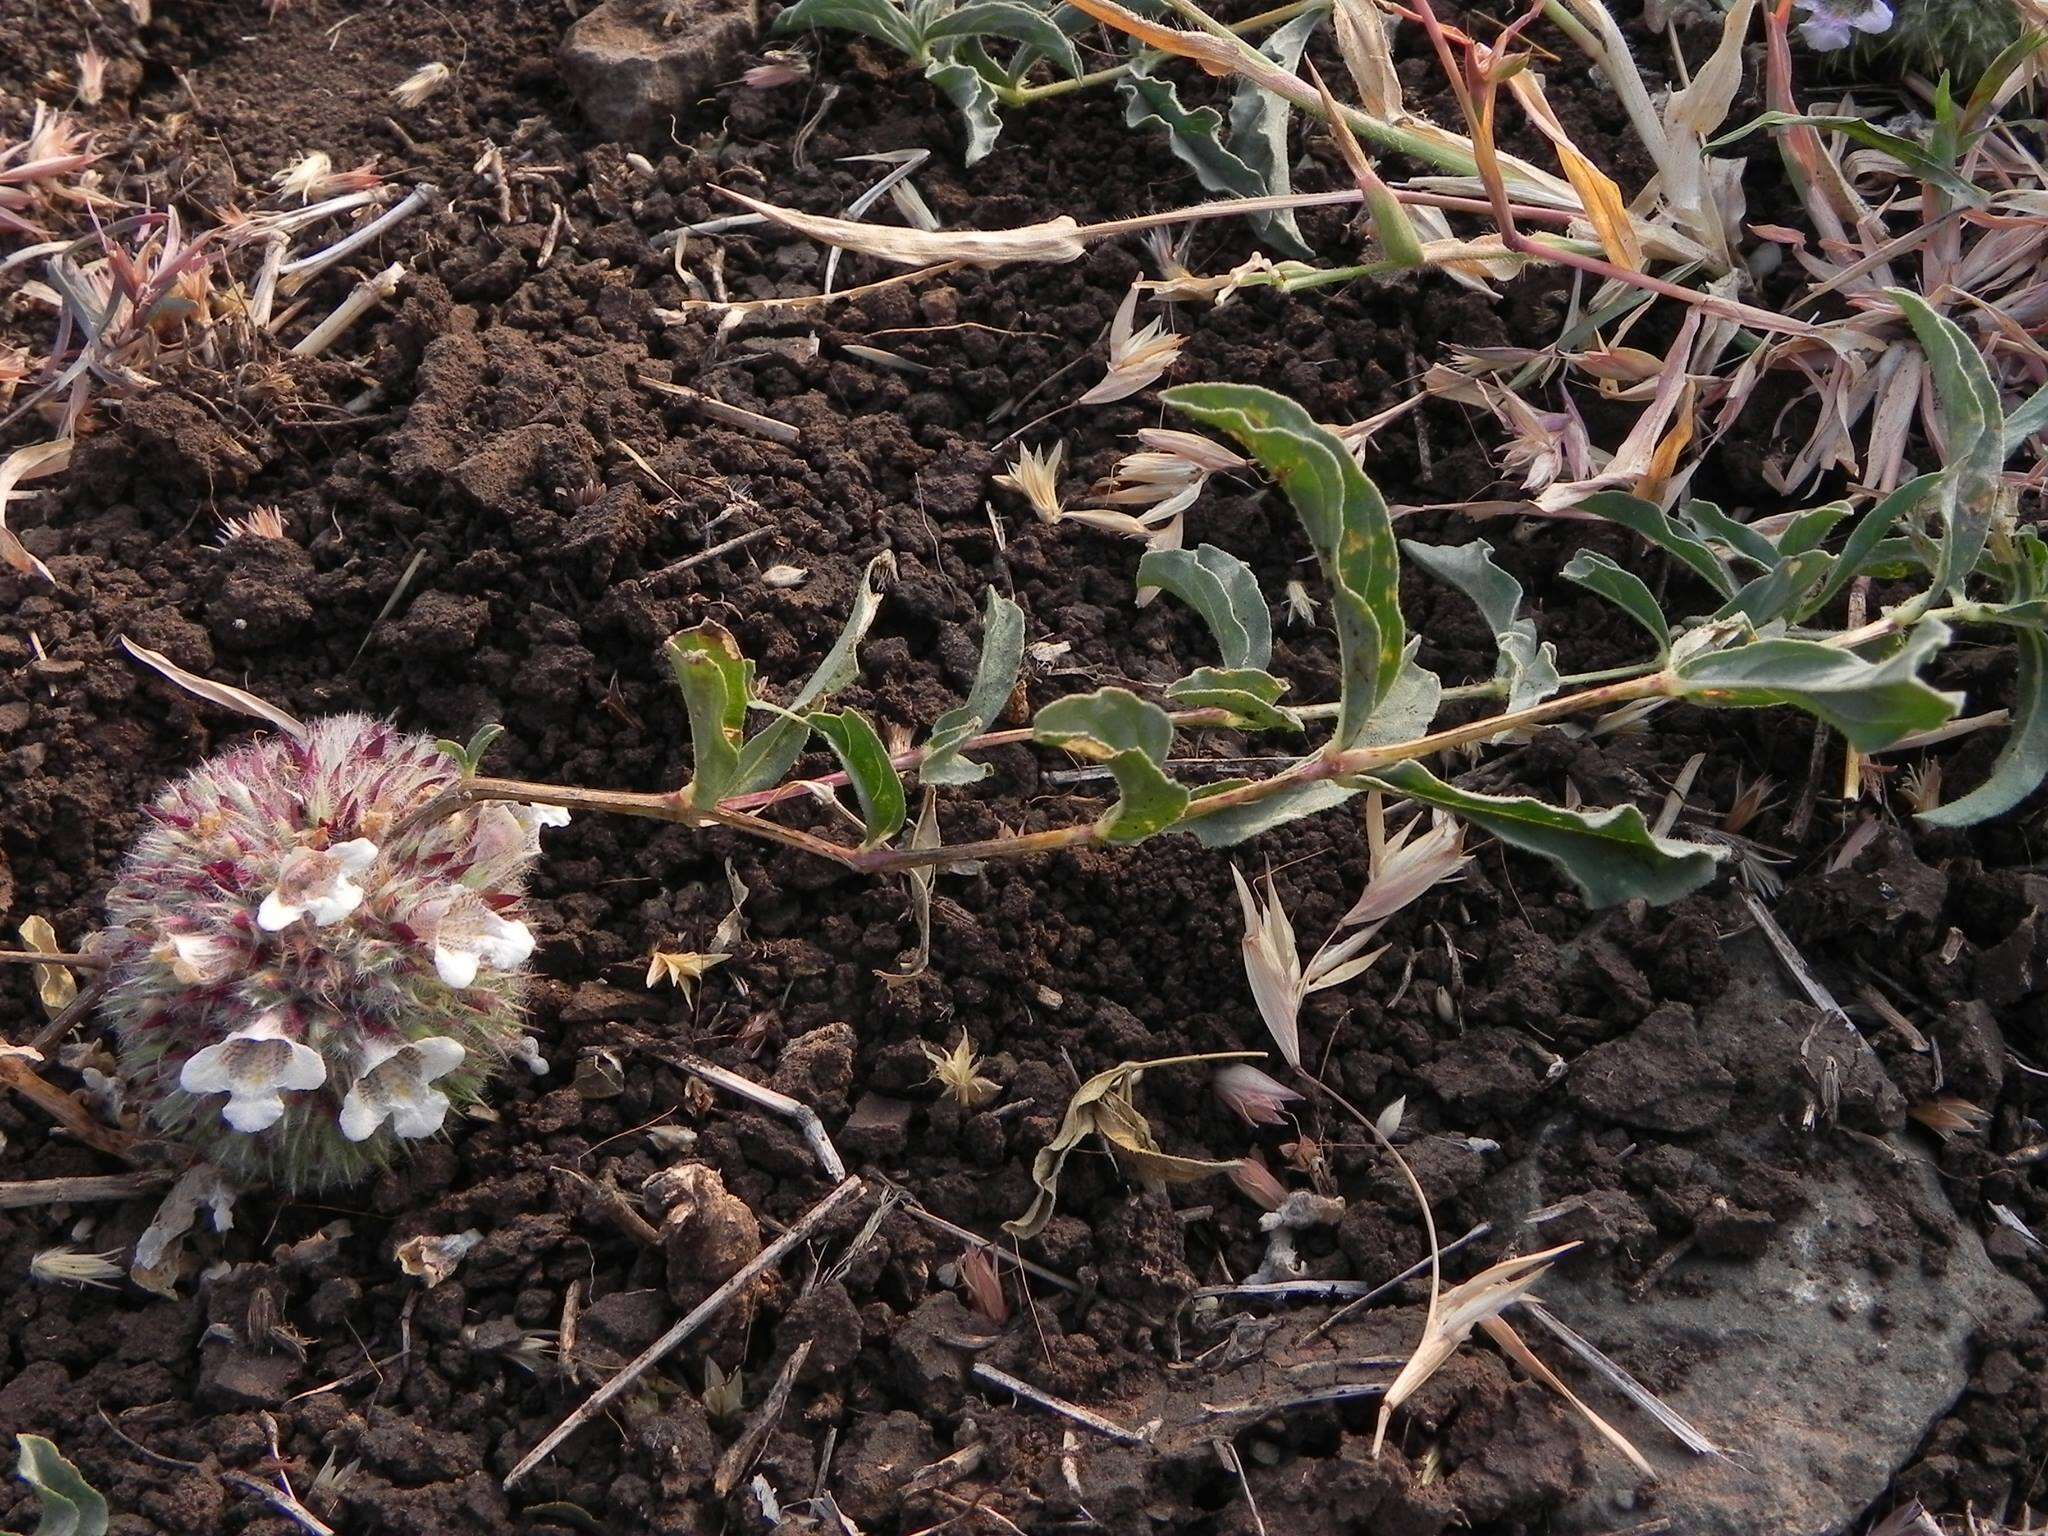 Image of Lepidagathis cristata Willd.